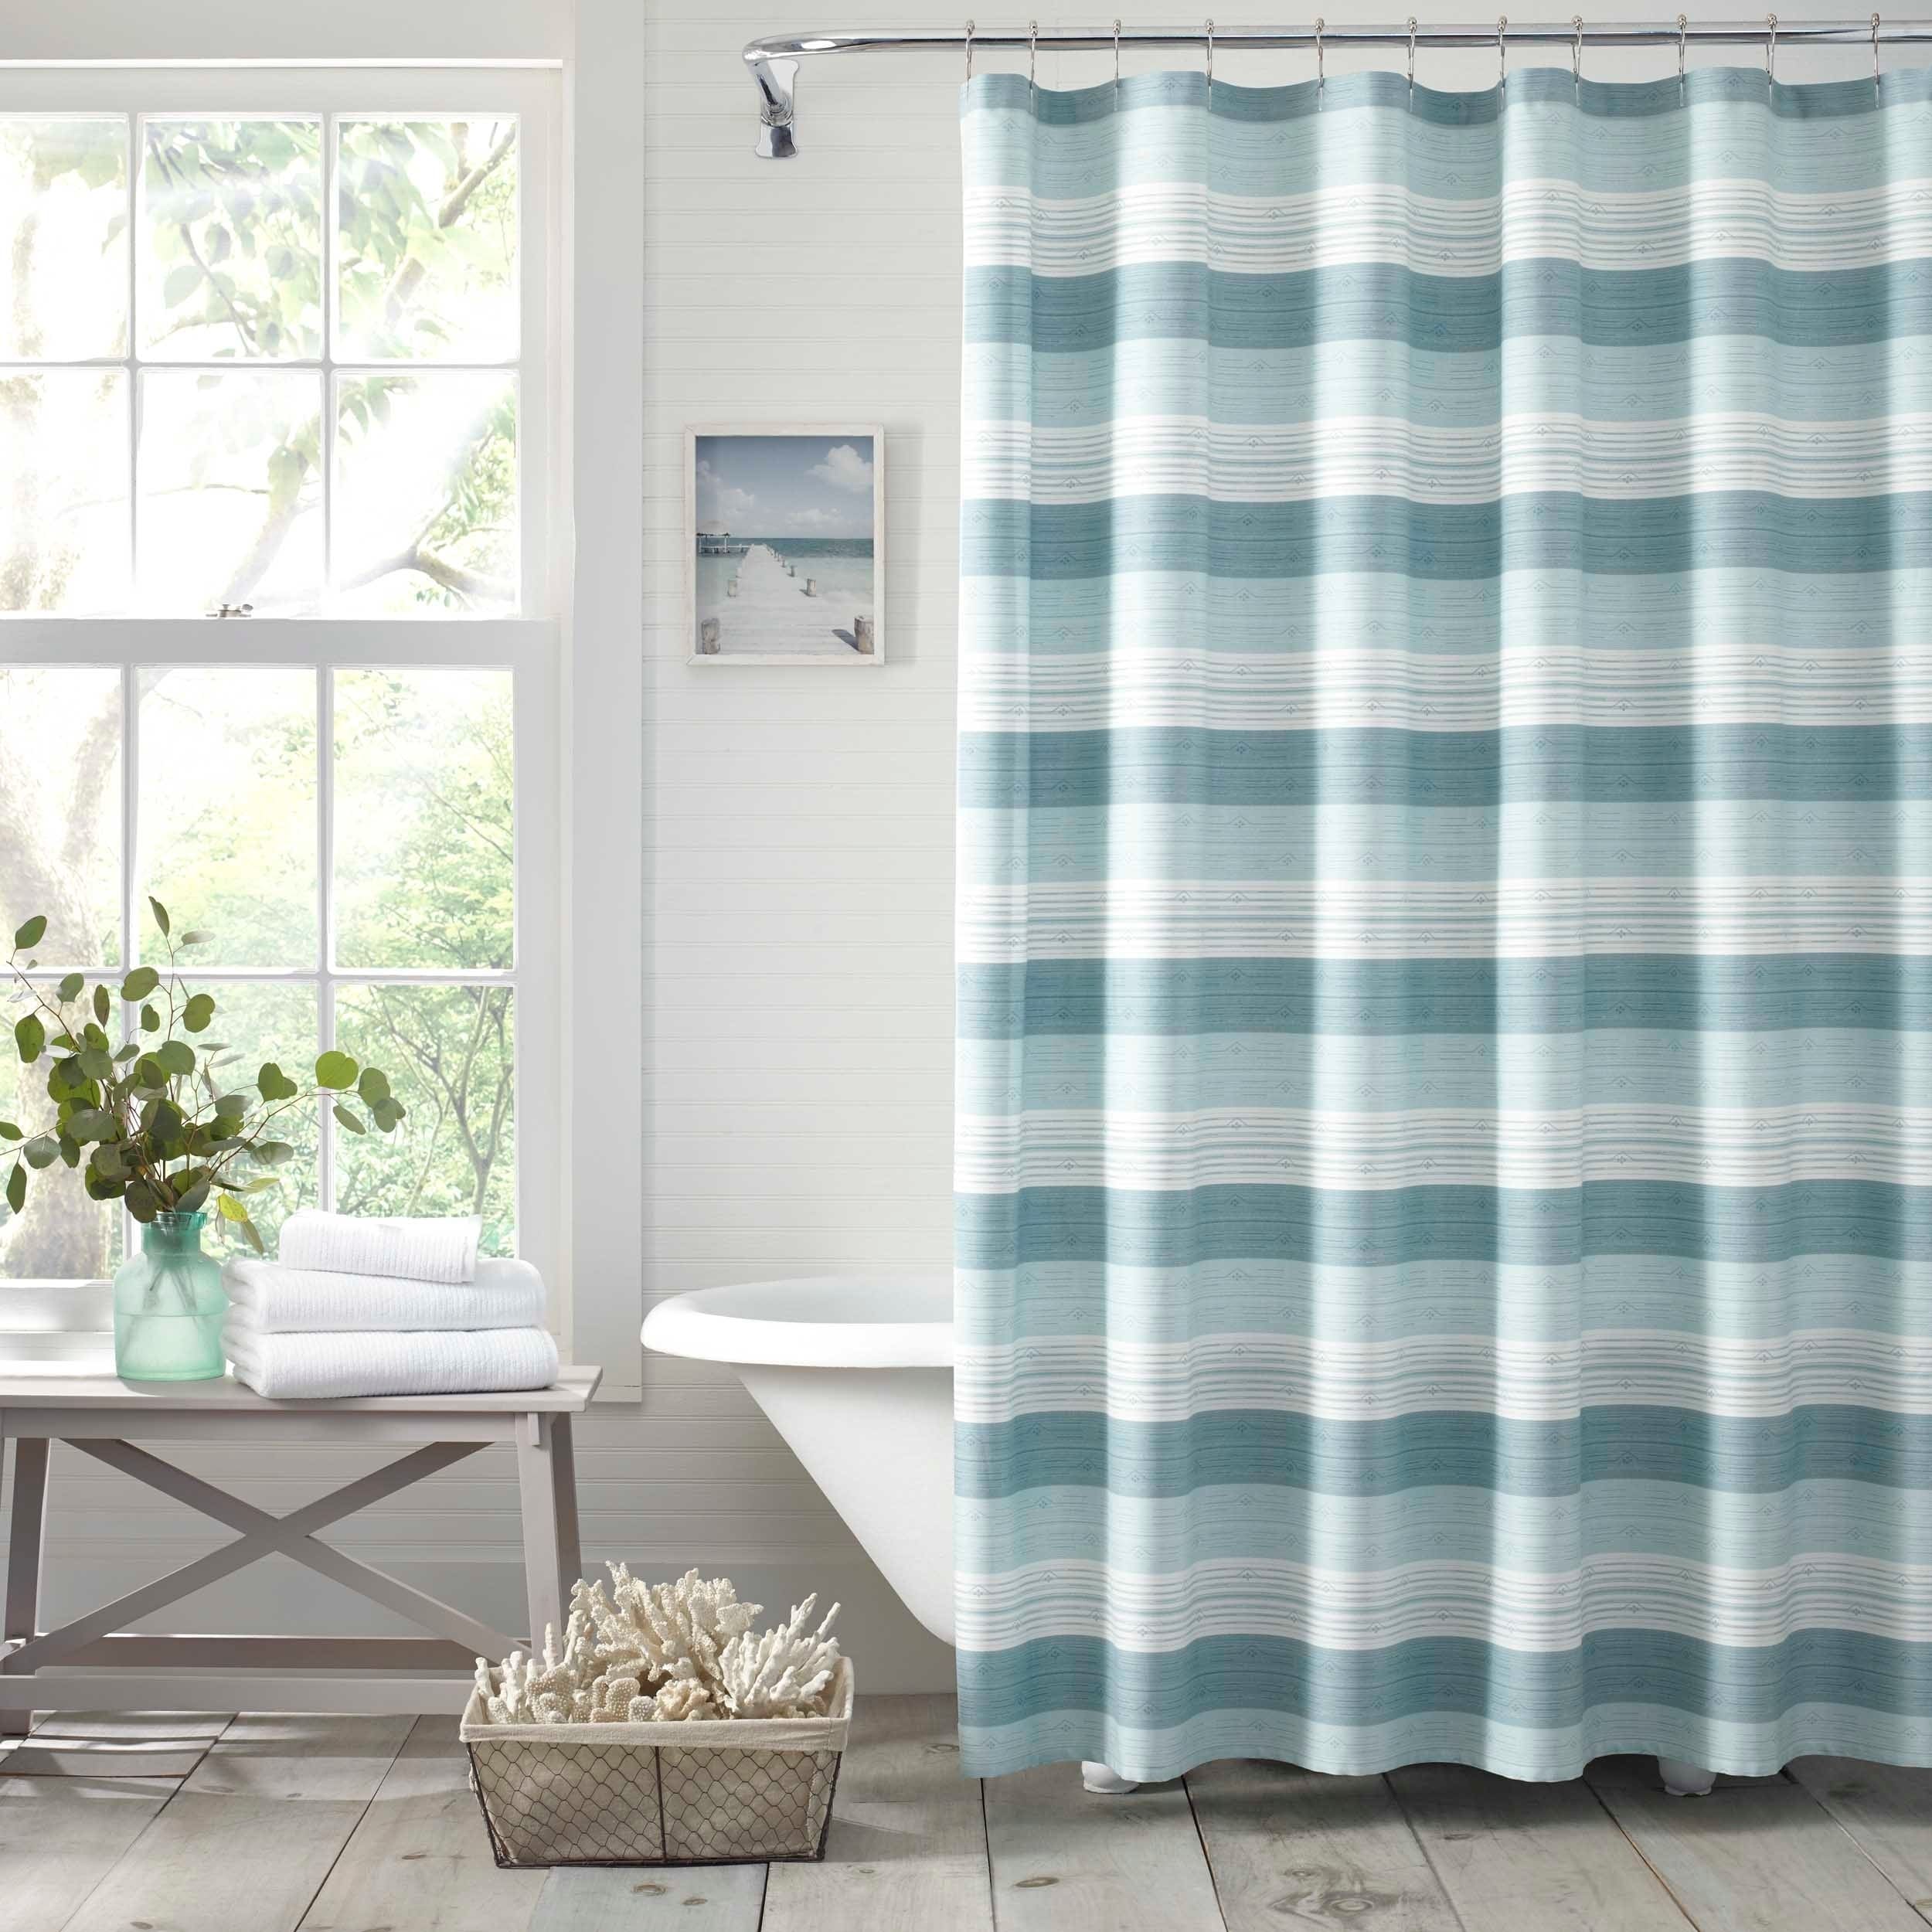 Tropical Shower Curtains - Bed Bath & Beyond